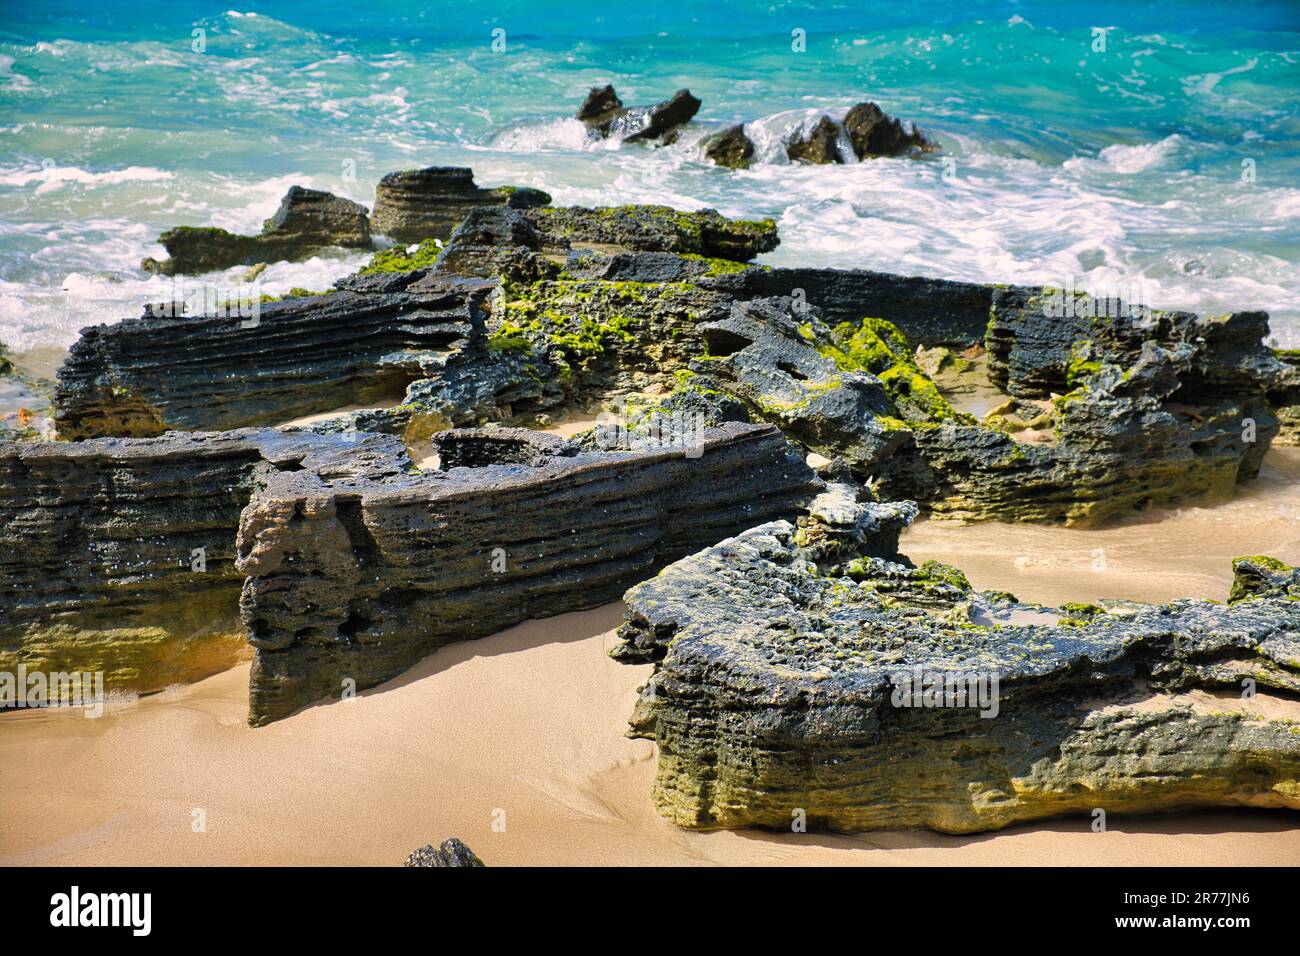 Algae-covered pancake rocks on a beach with wild waves, Esperance, Western Australia Stock Photo